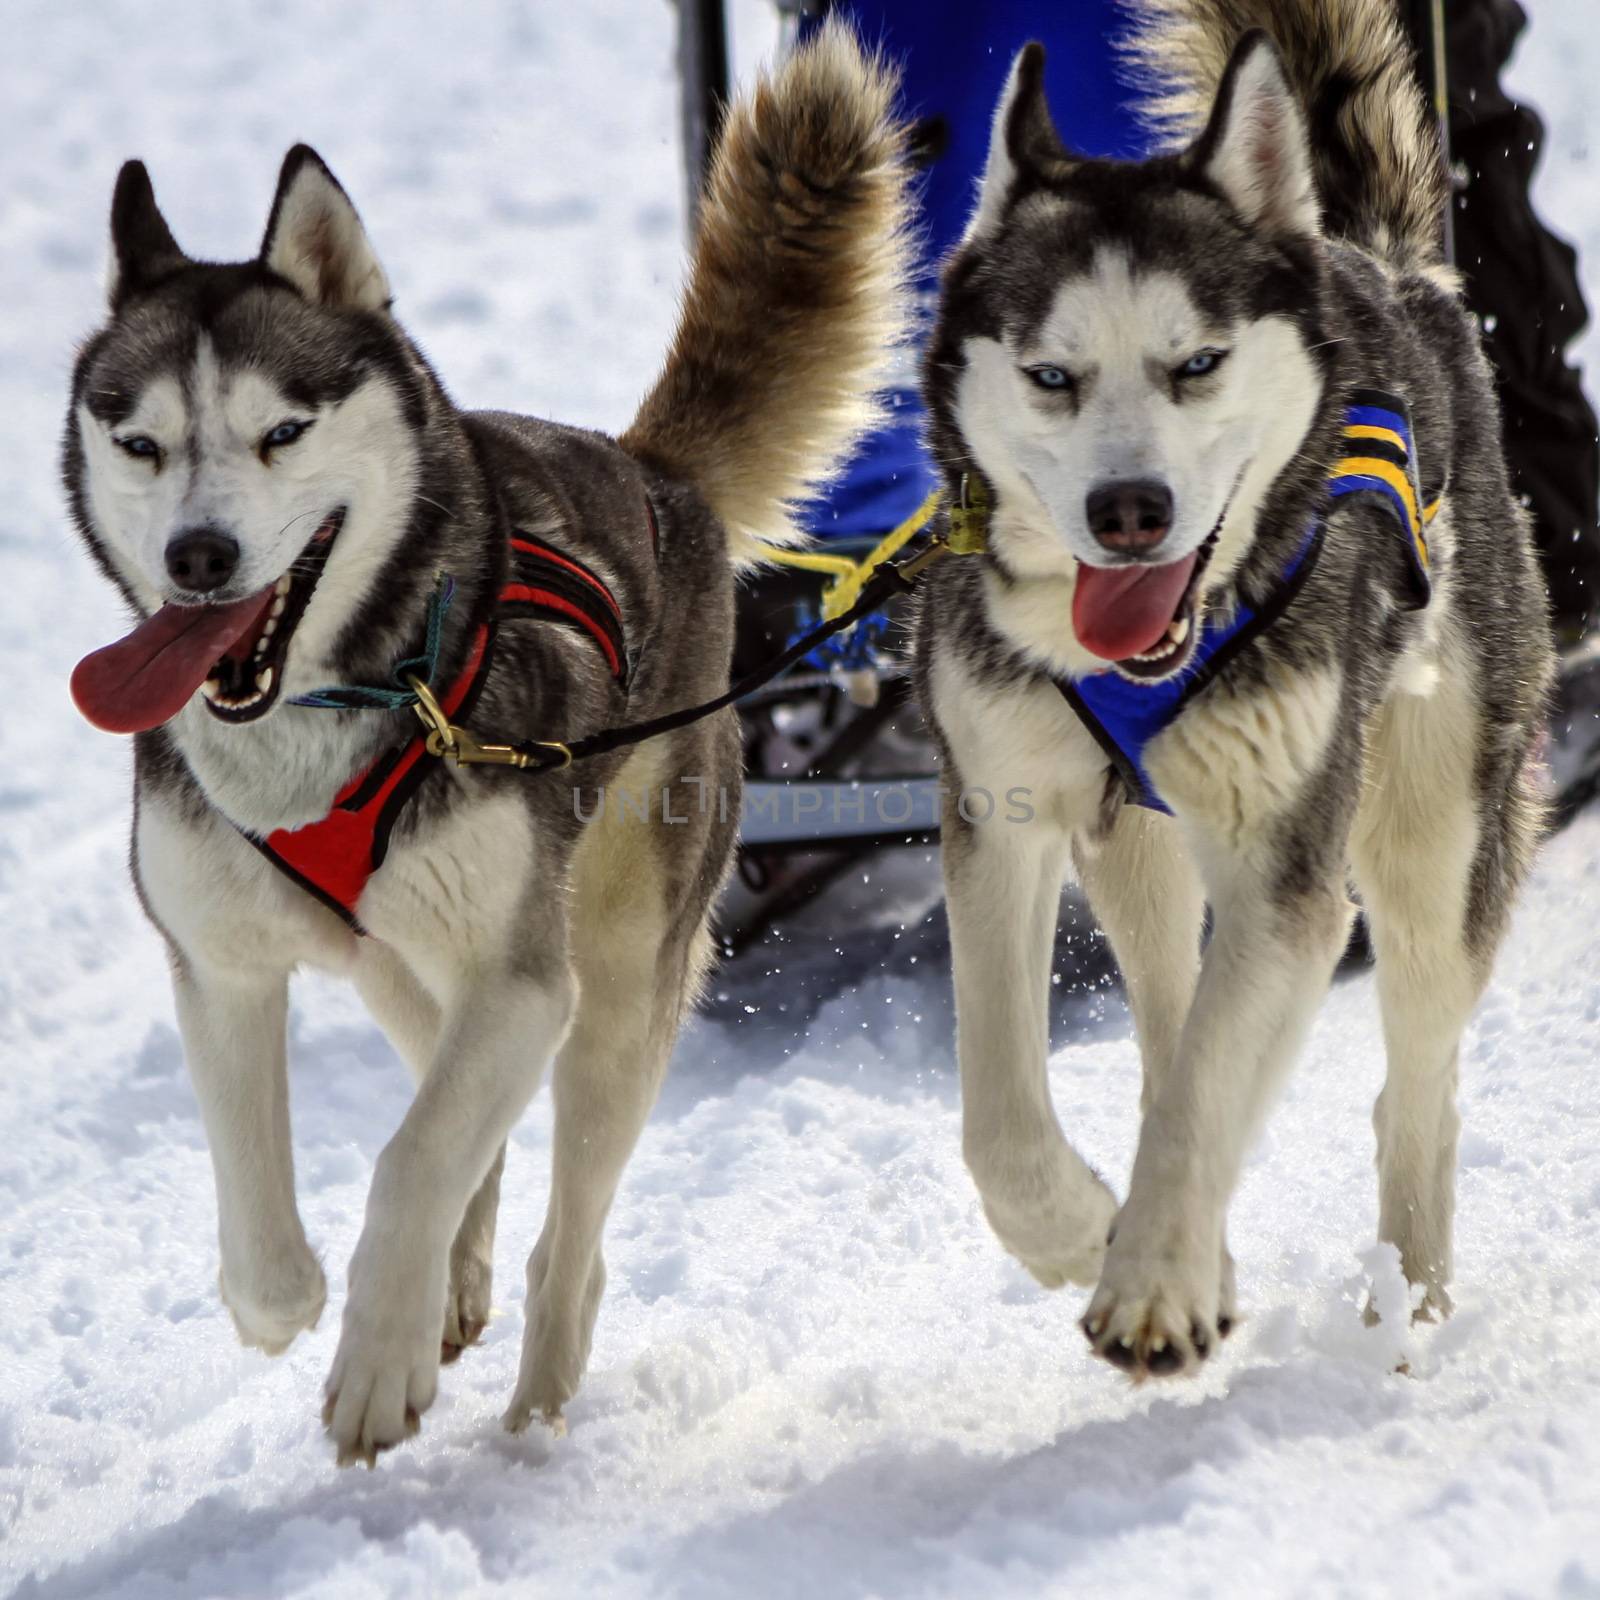 Husky sled dog team at work by Elenaphotos21